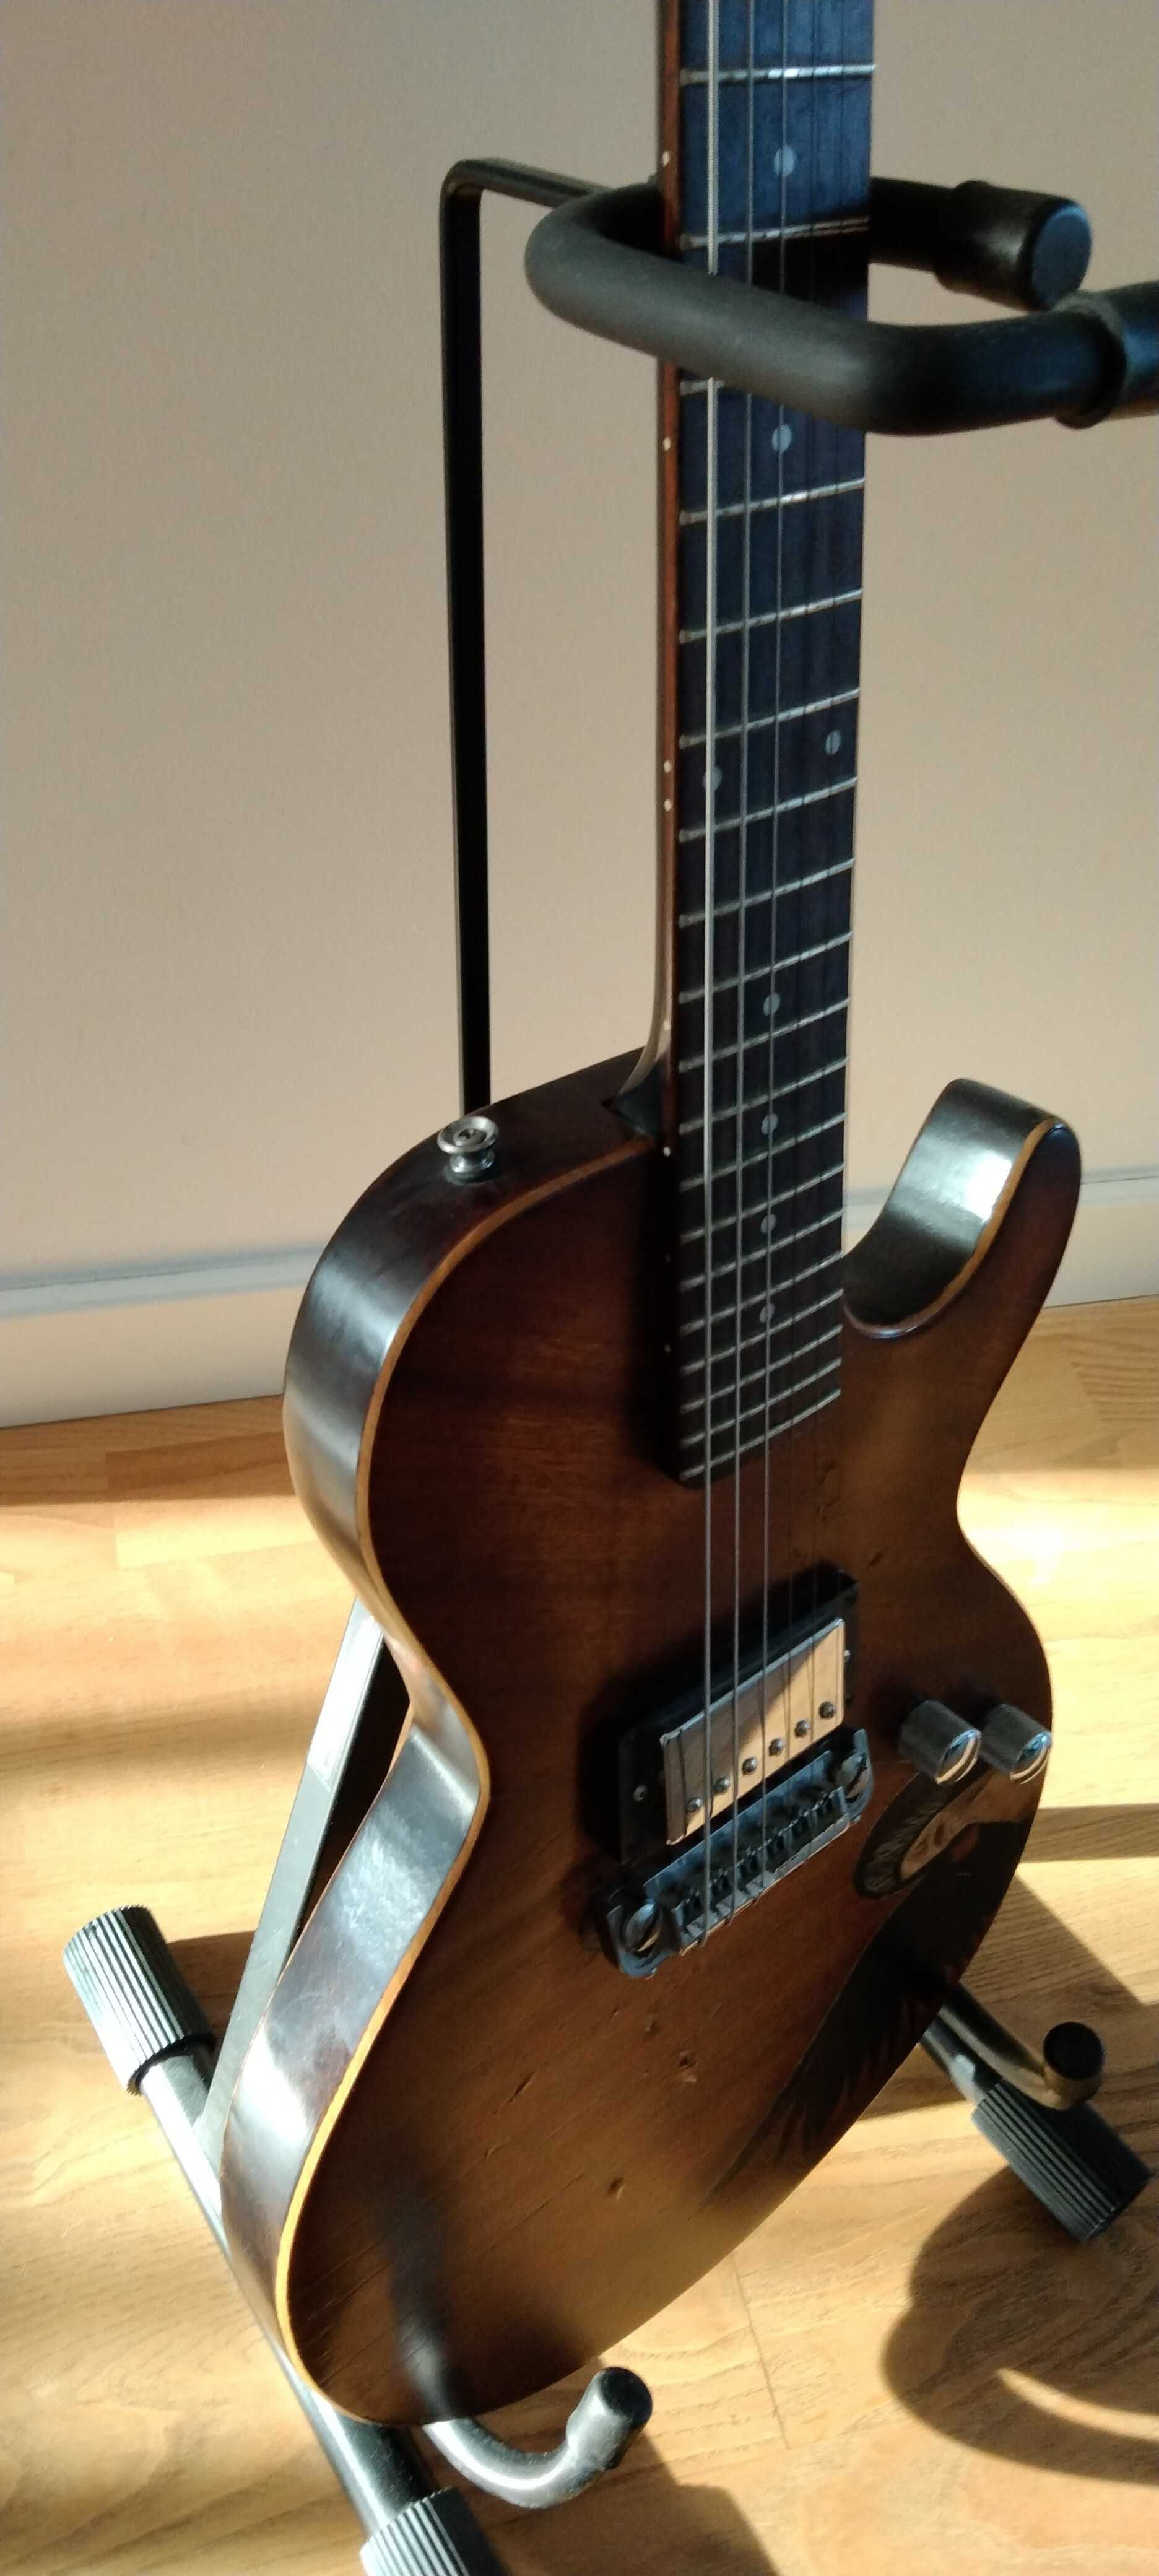 Gitara intarsjowana Intaro Custom Guitars unikat